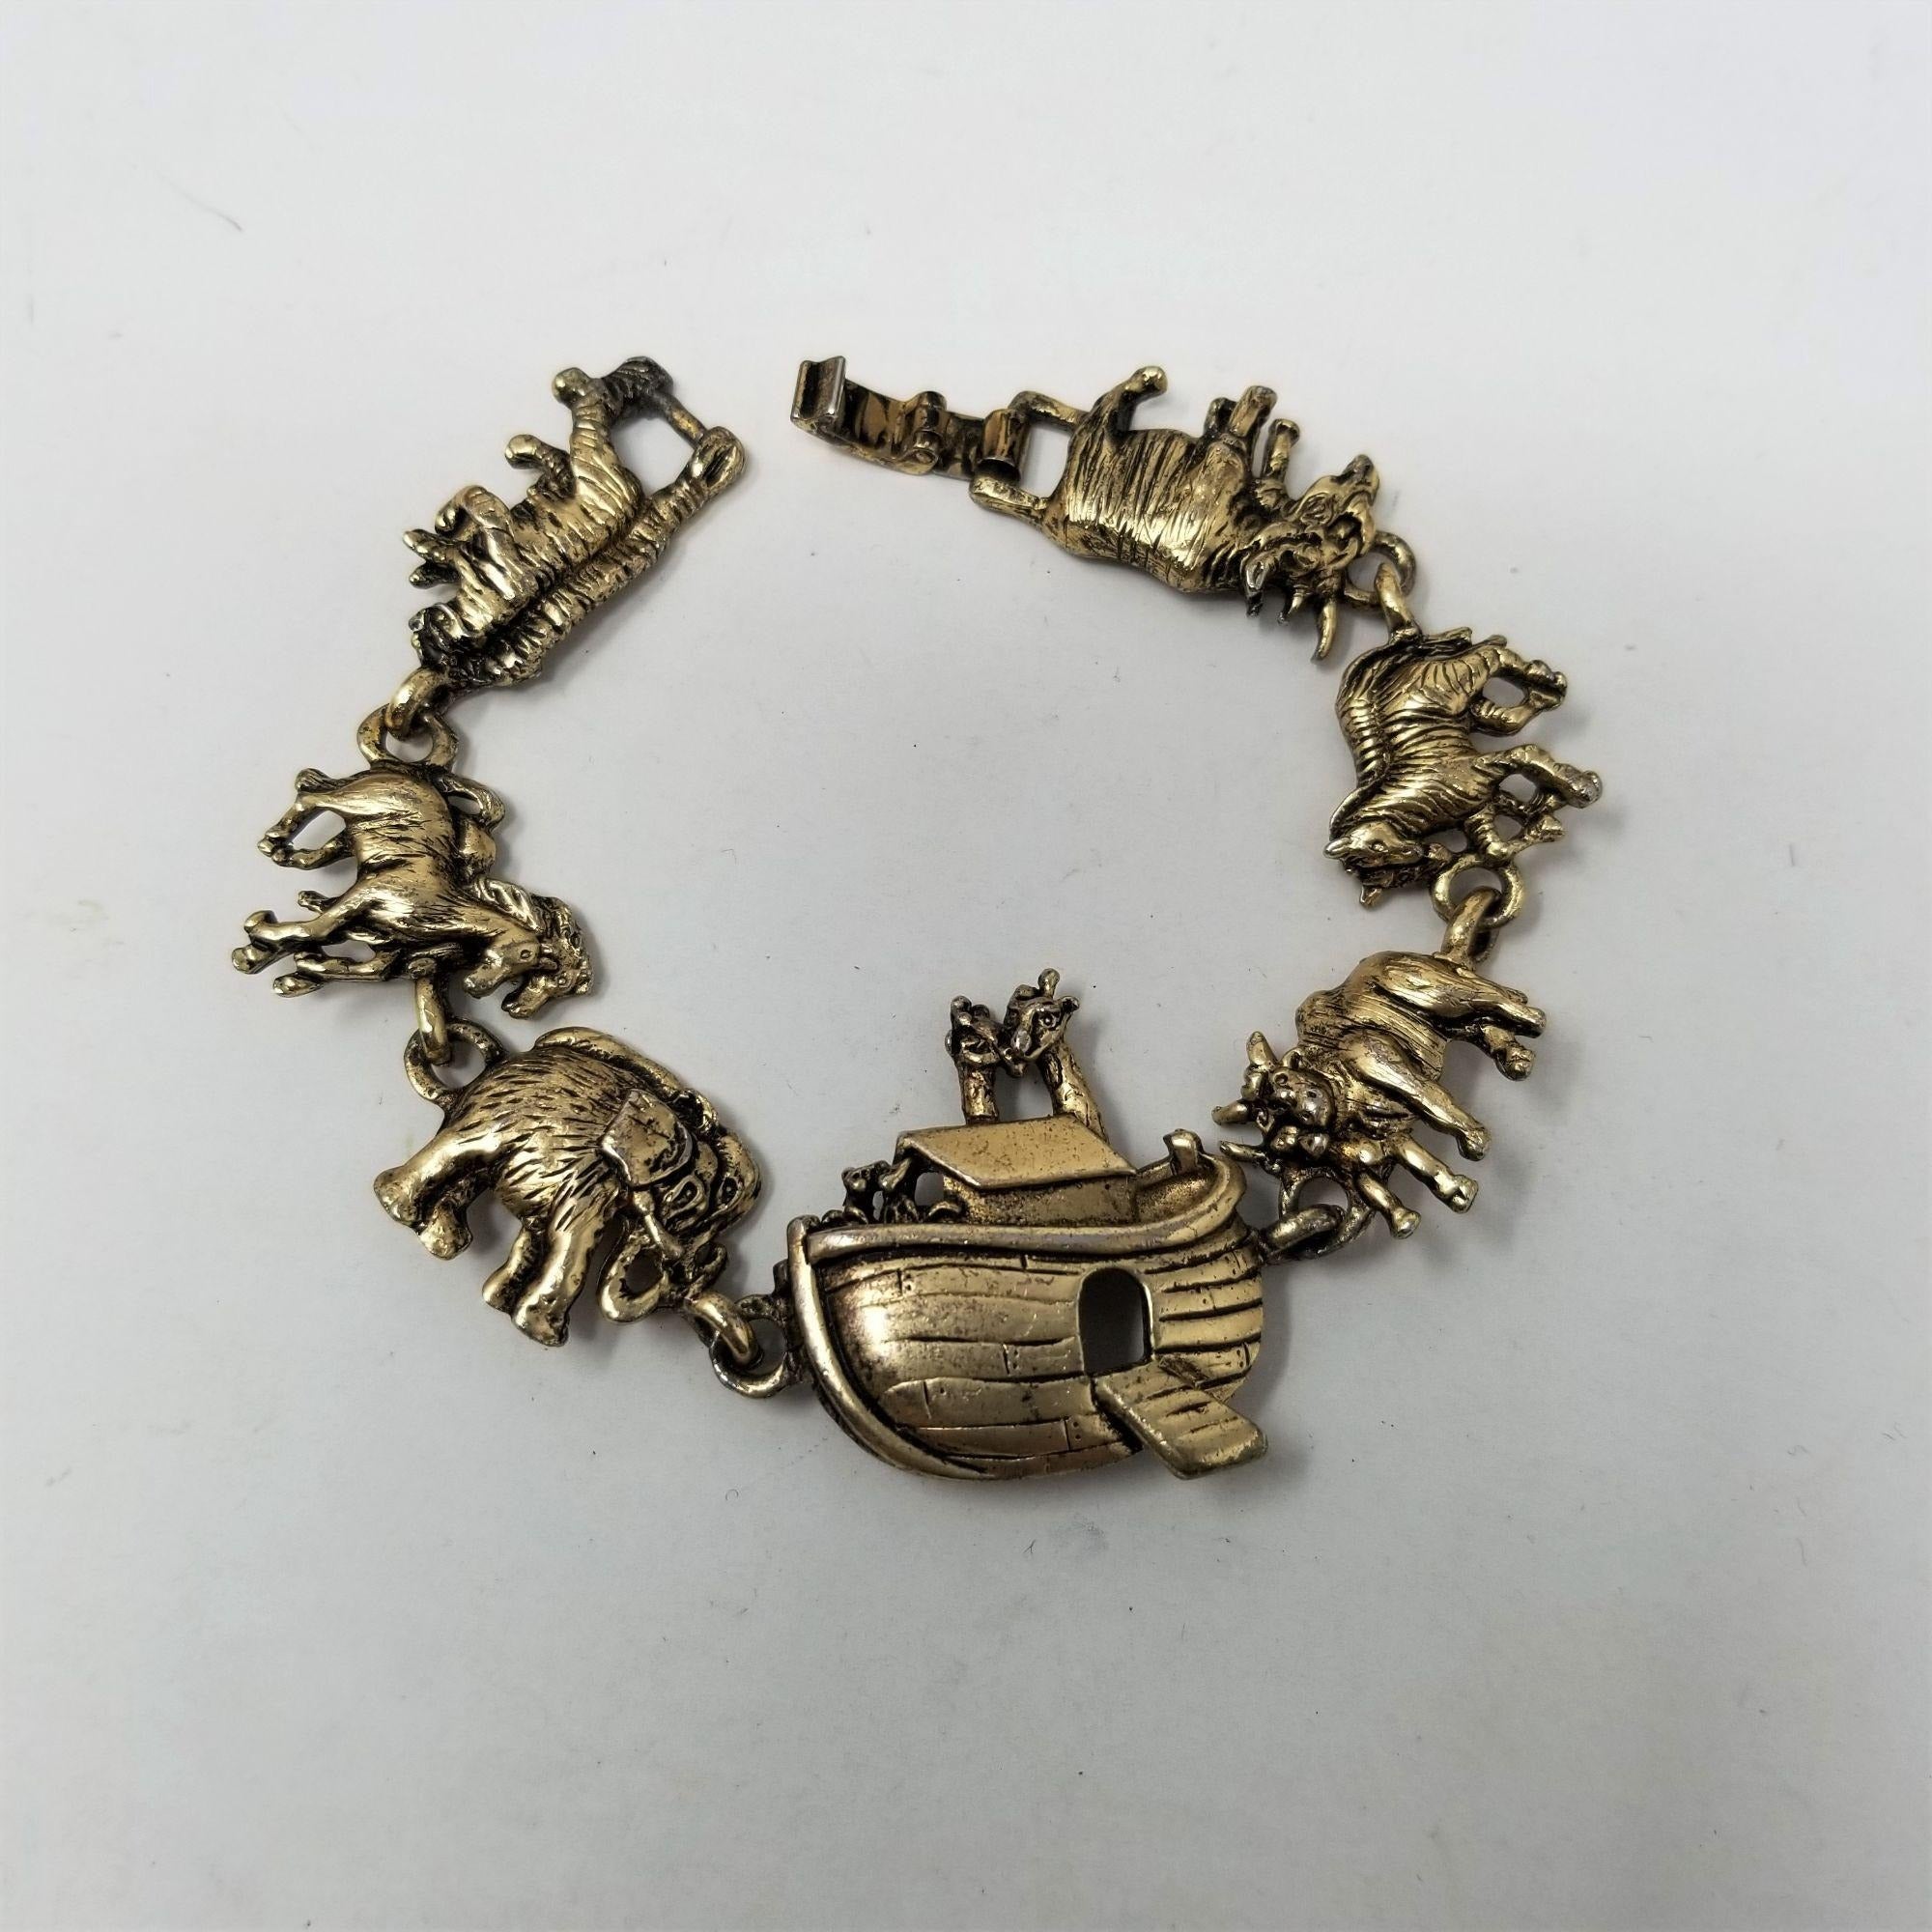 Noah’s Ark Bracelet Brass Color Animals